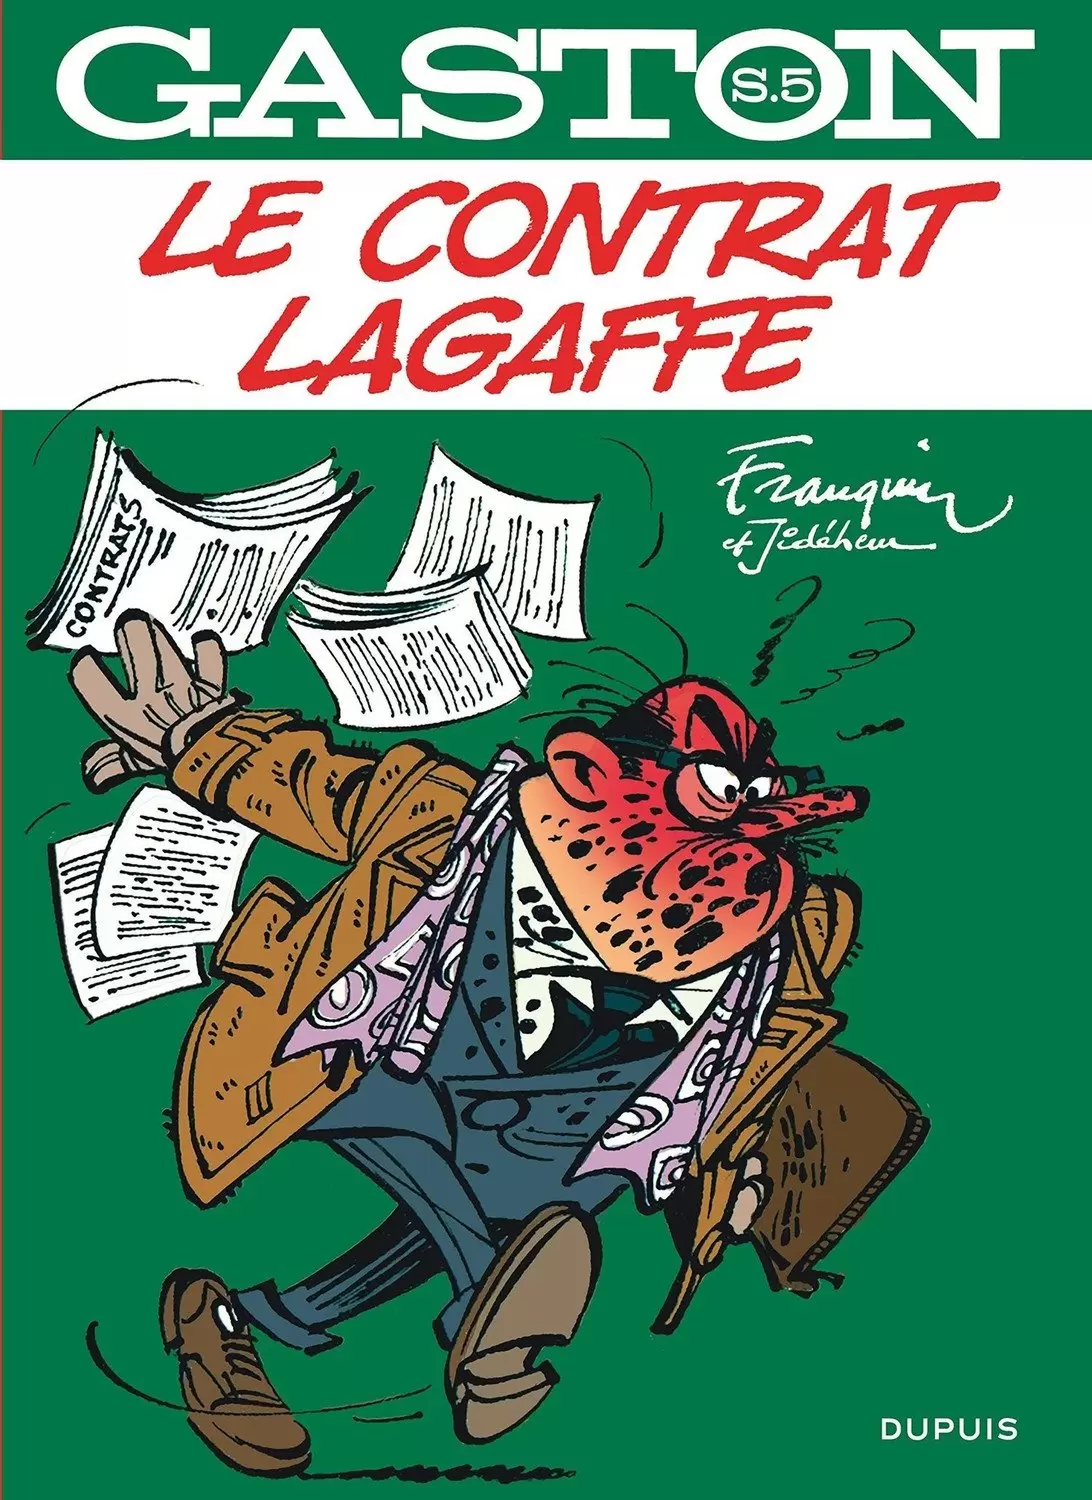 Gaston Lagaffe - Le contrat Lagaffe